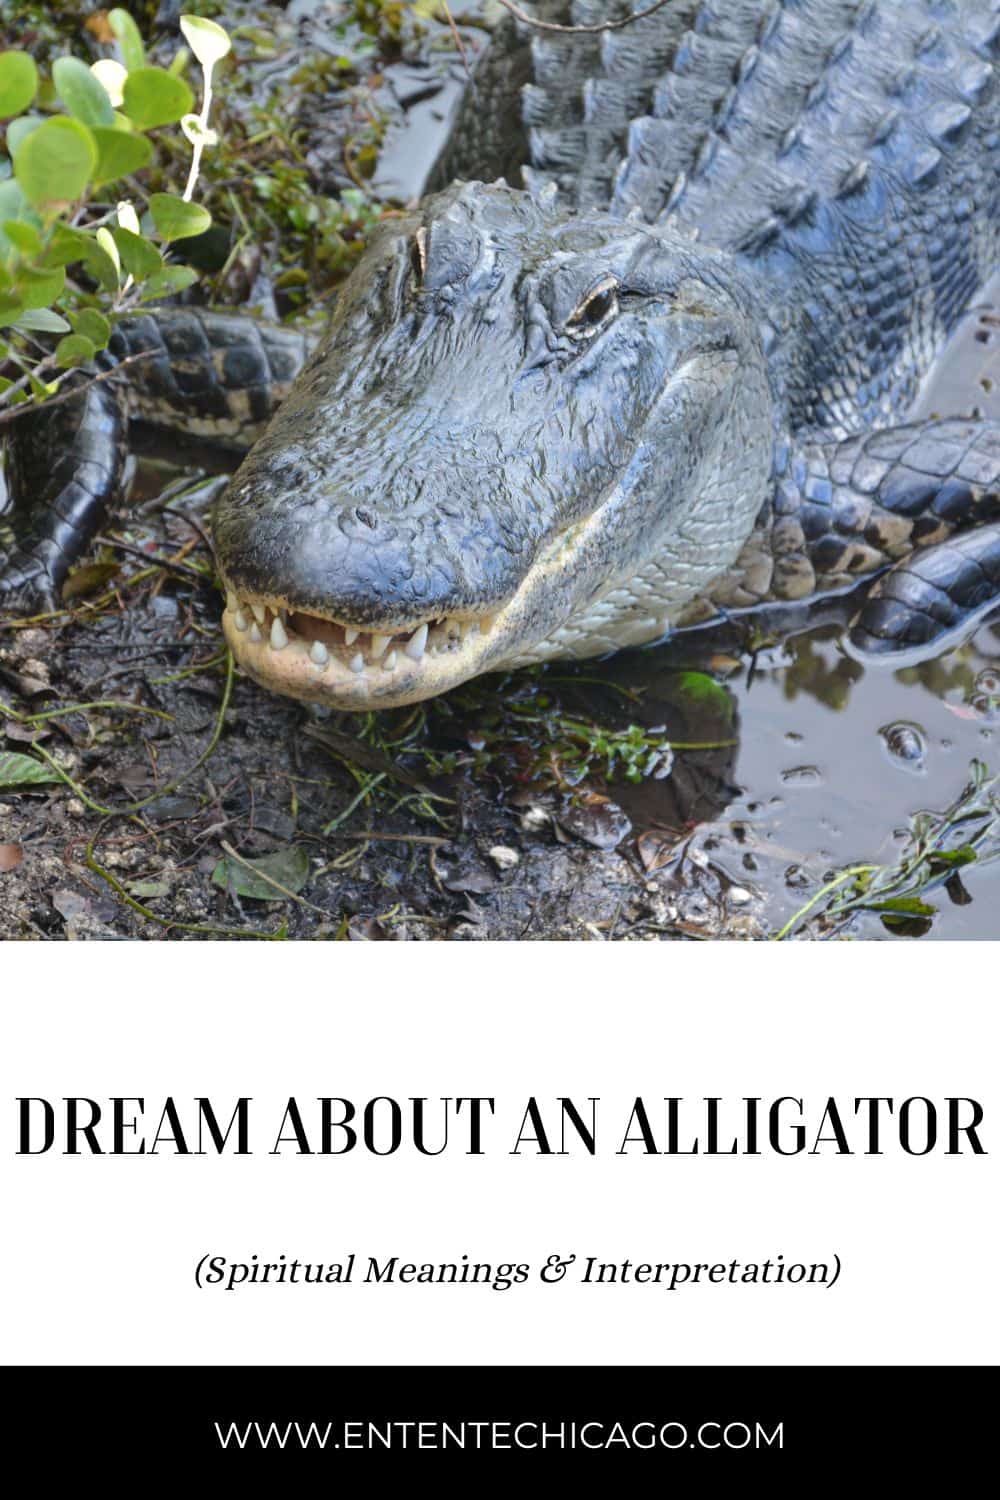 Dreaming About an Alligator: 10 General Interpretations